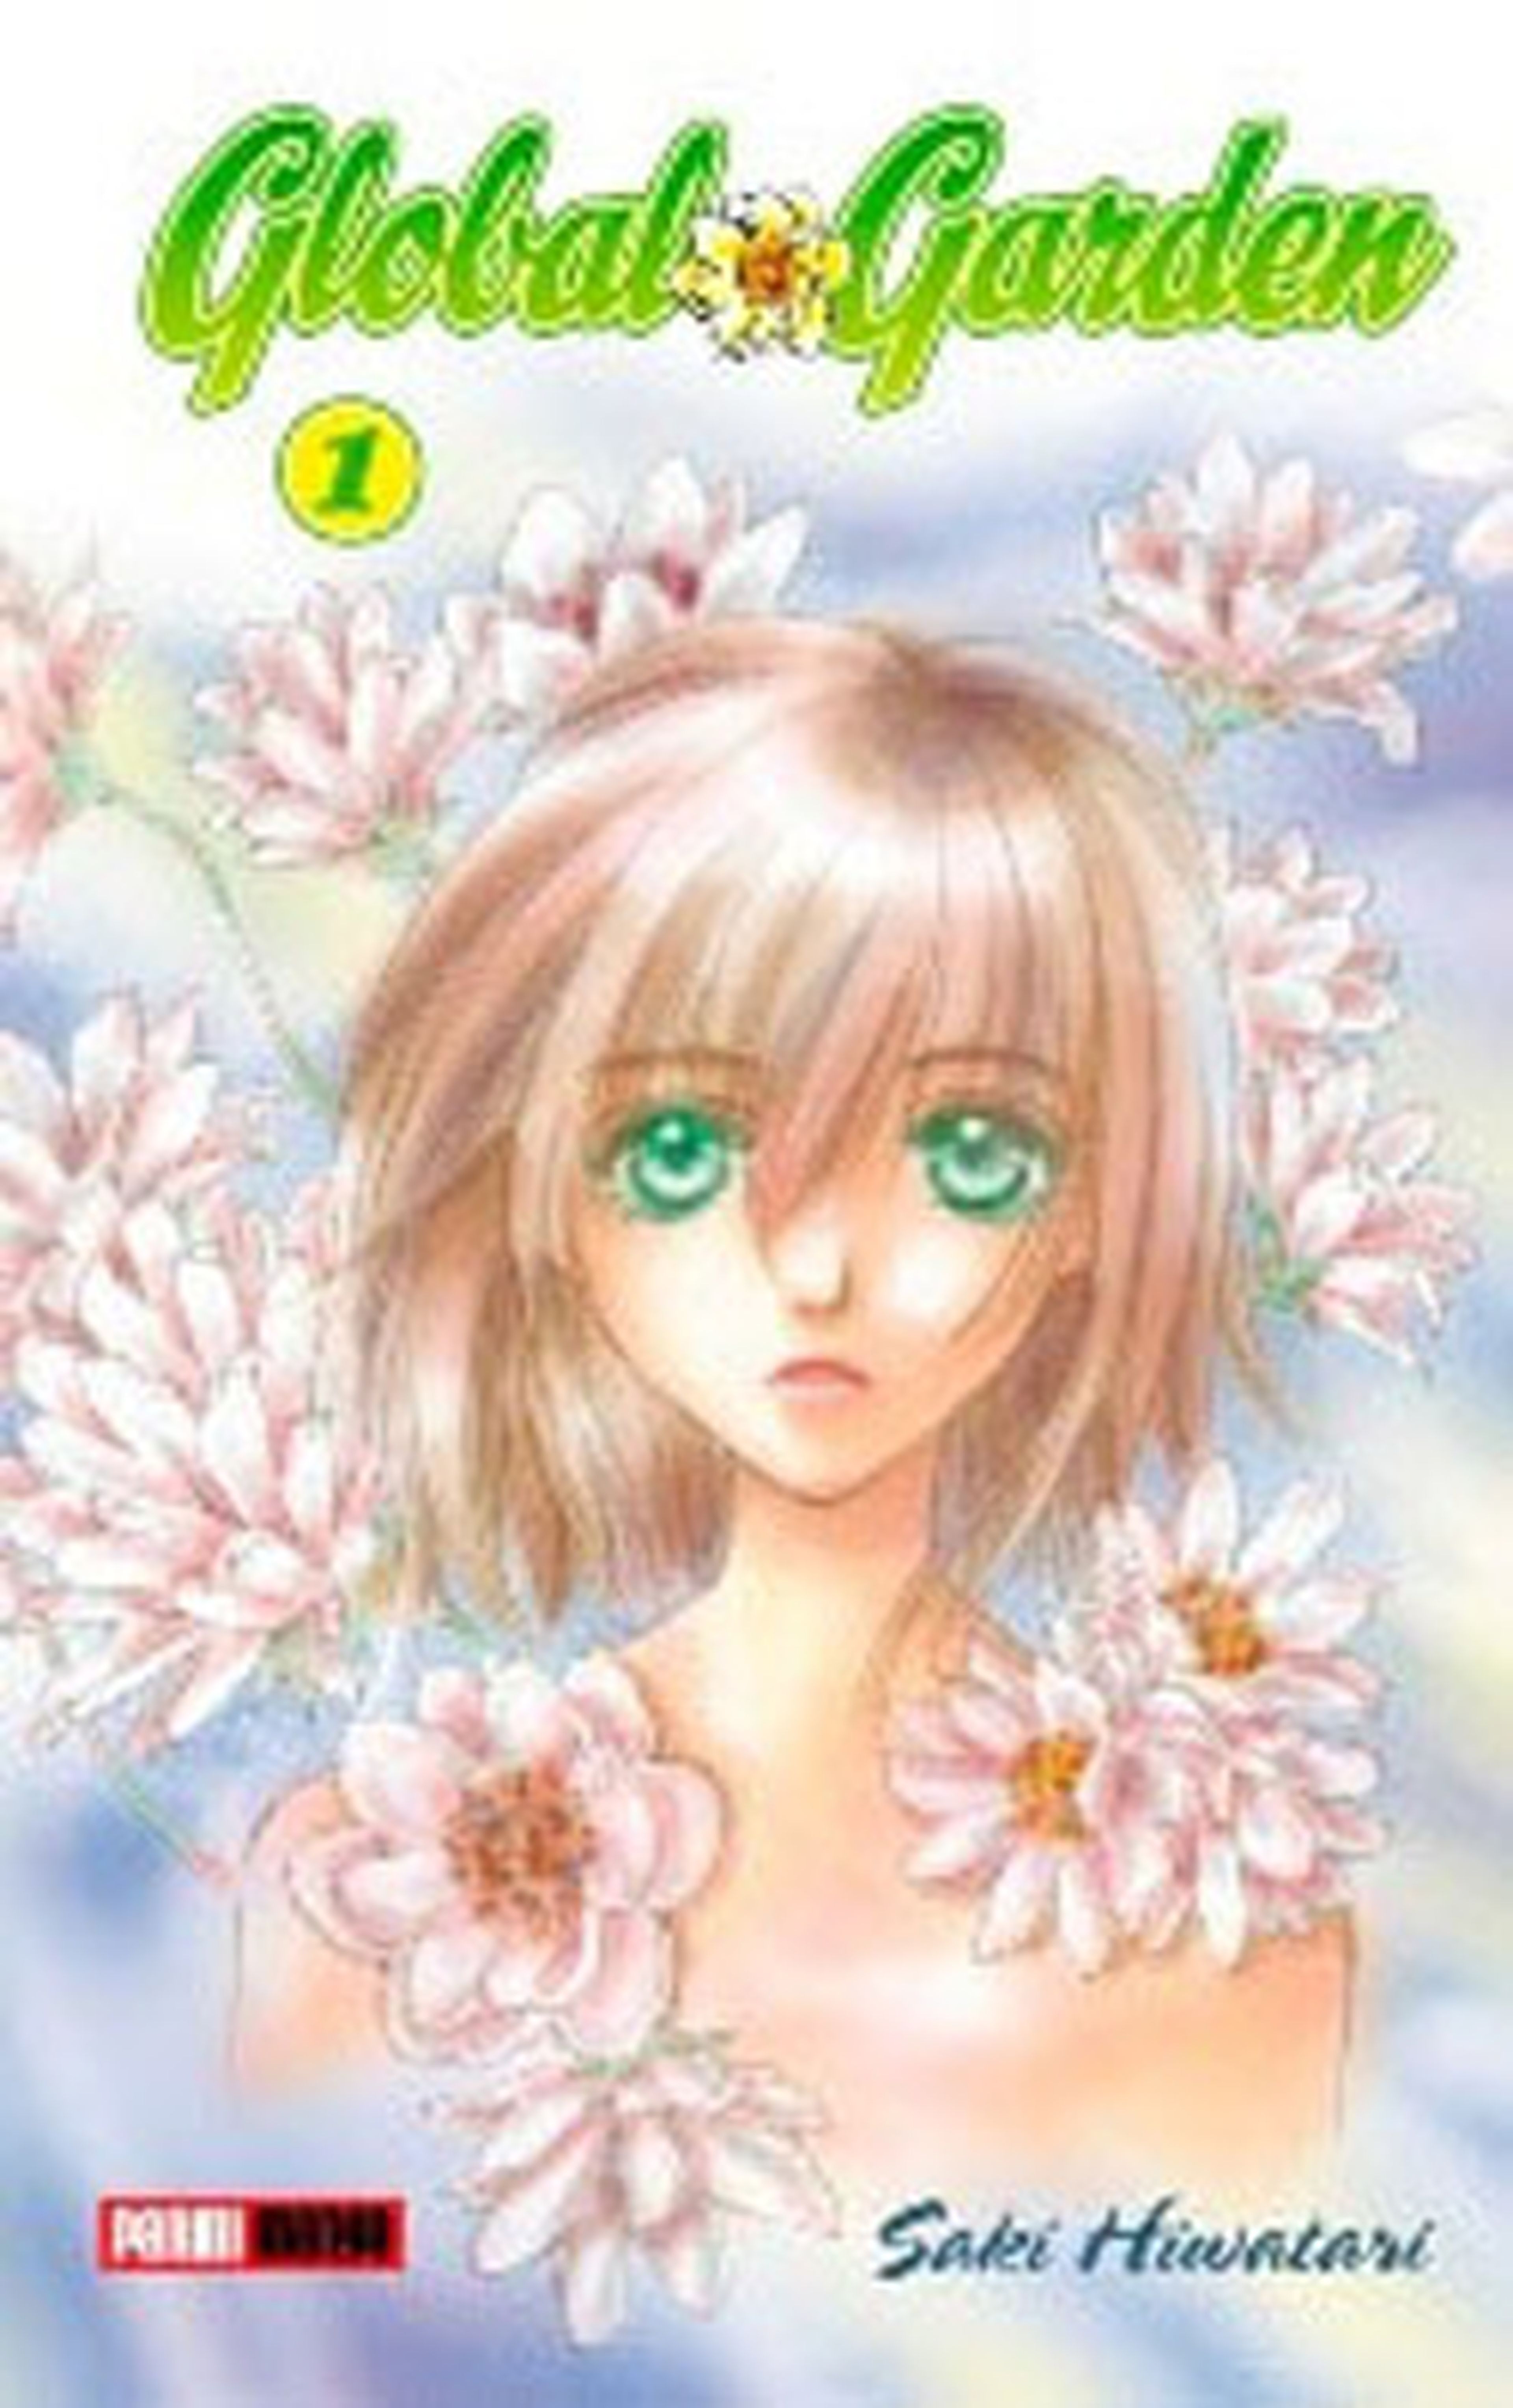 Panini descataloga ocho series manga